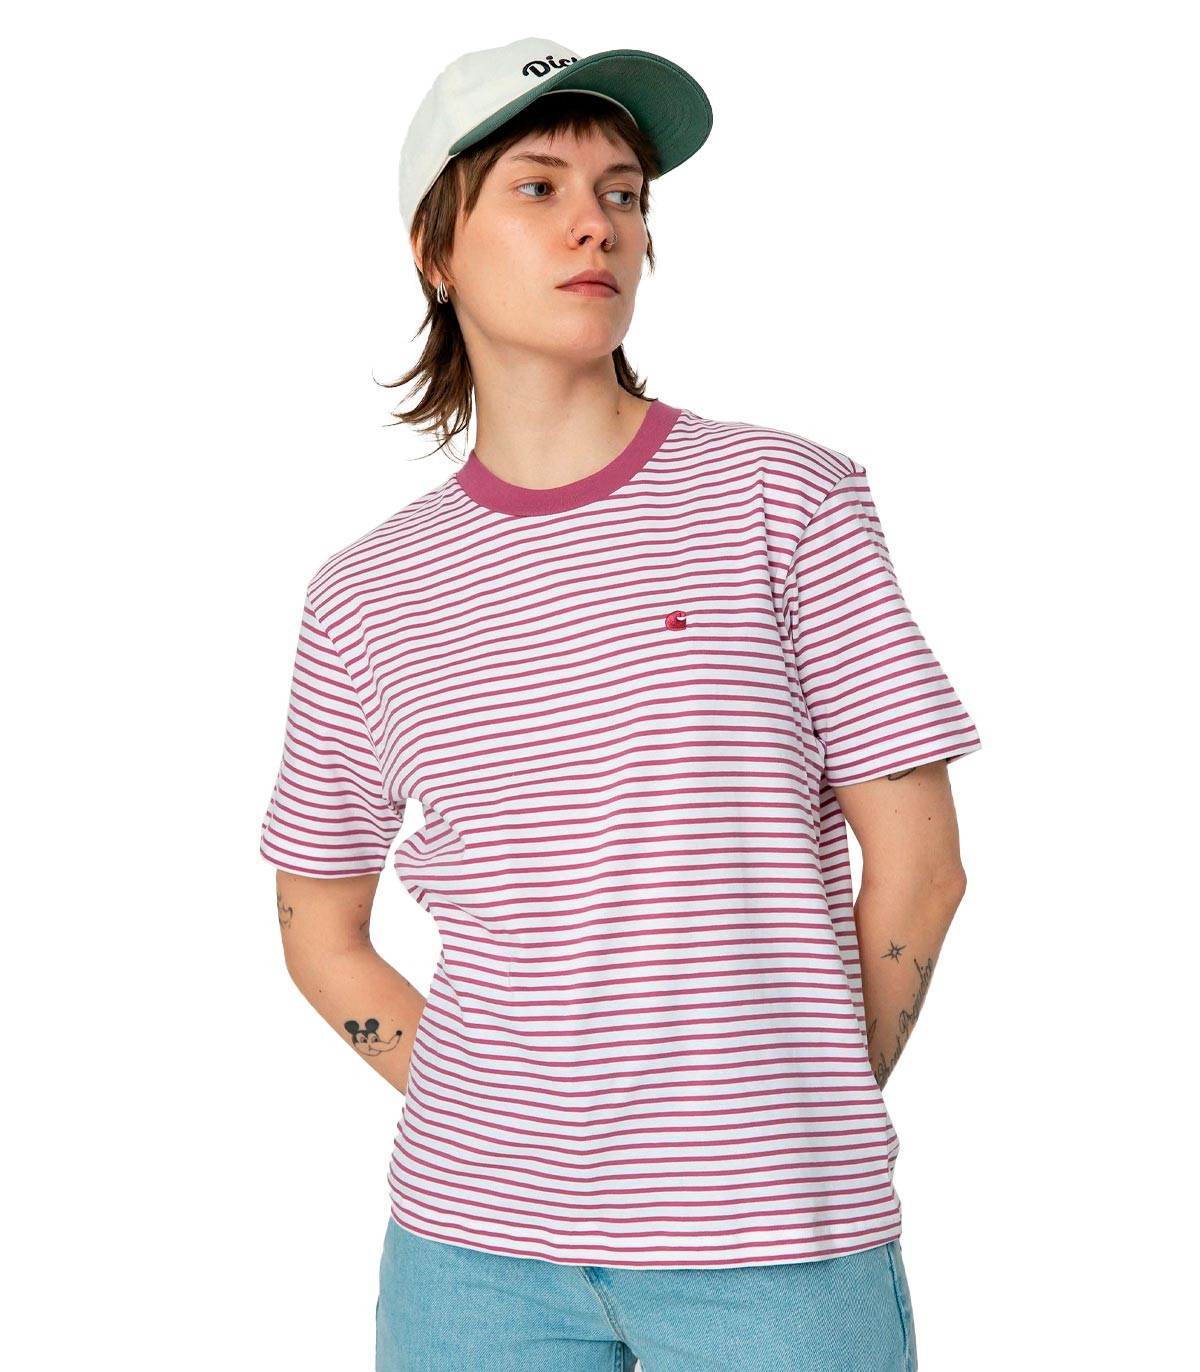 Carhartt Wip - Camiseta Coleen - Multicolor